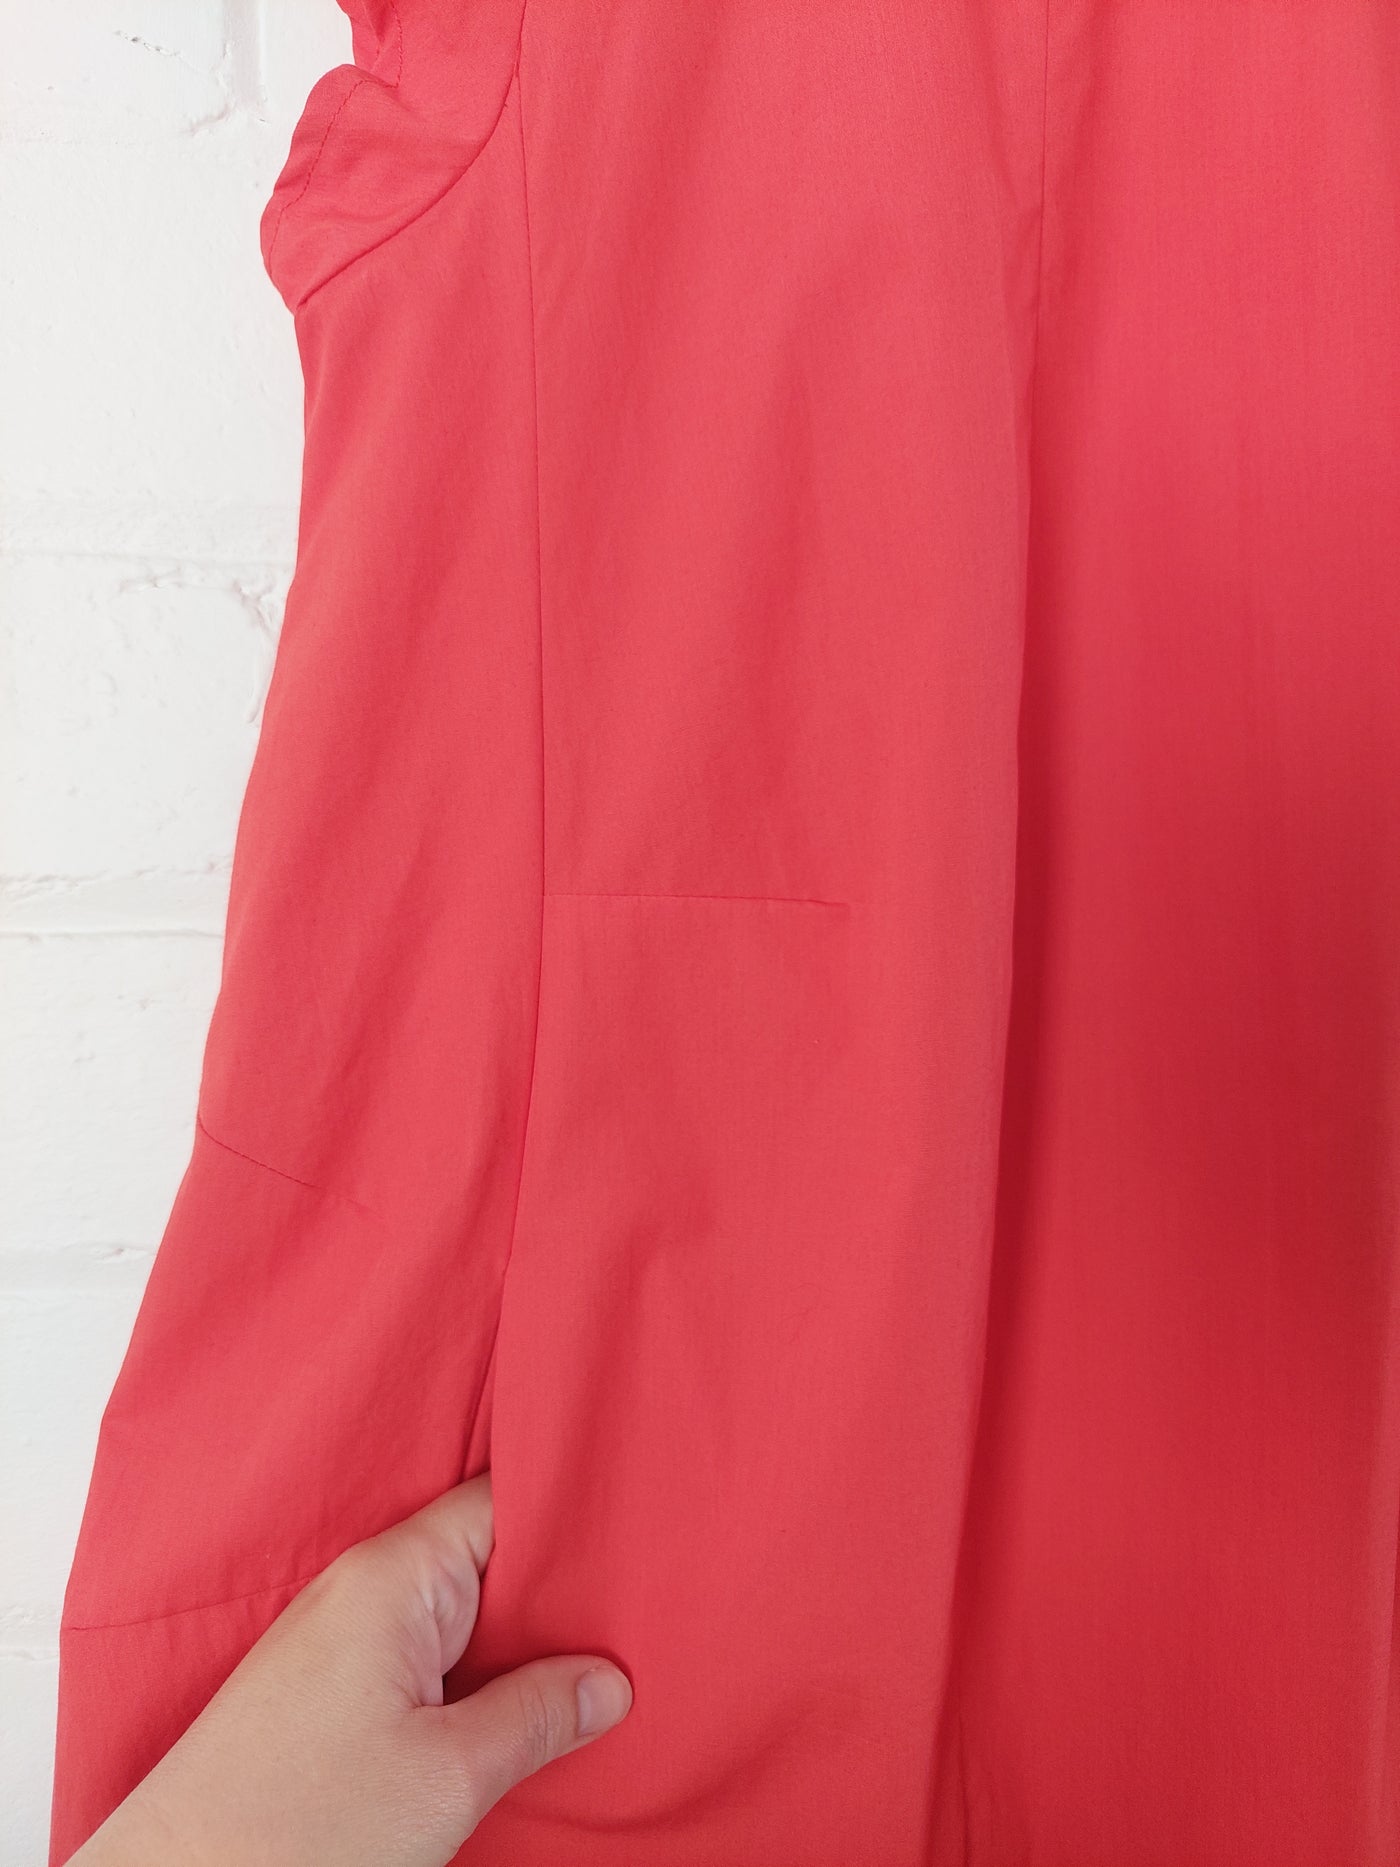 Marco Polo BNWT 100% Cotton Tangerine dress, Size 8